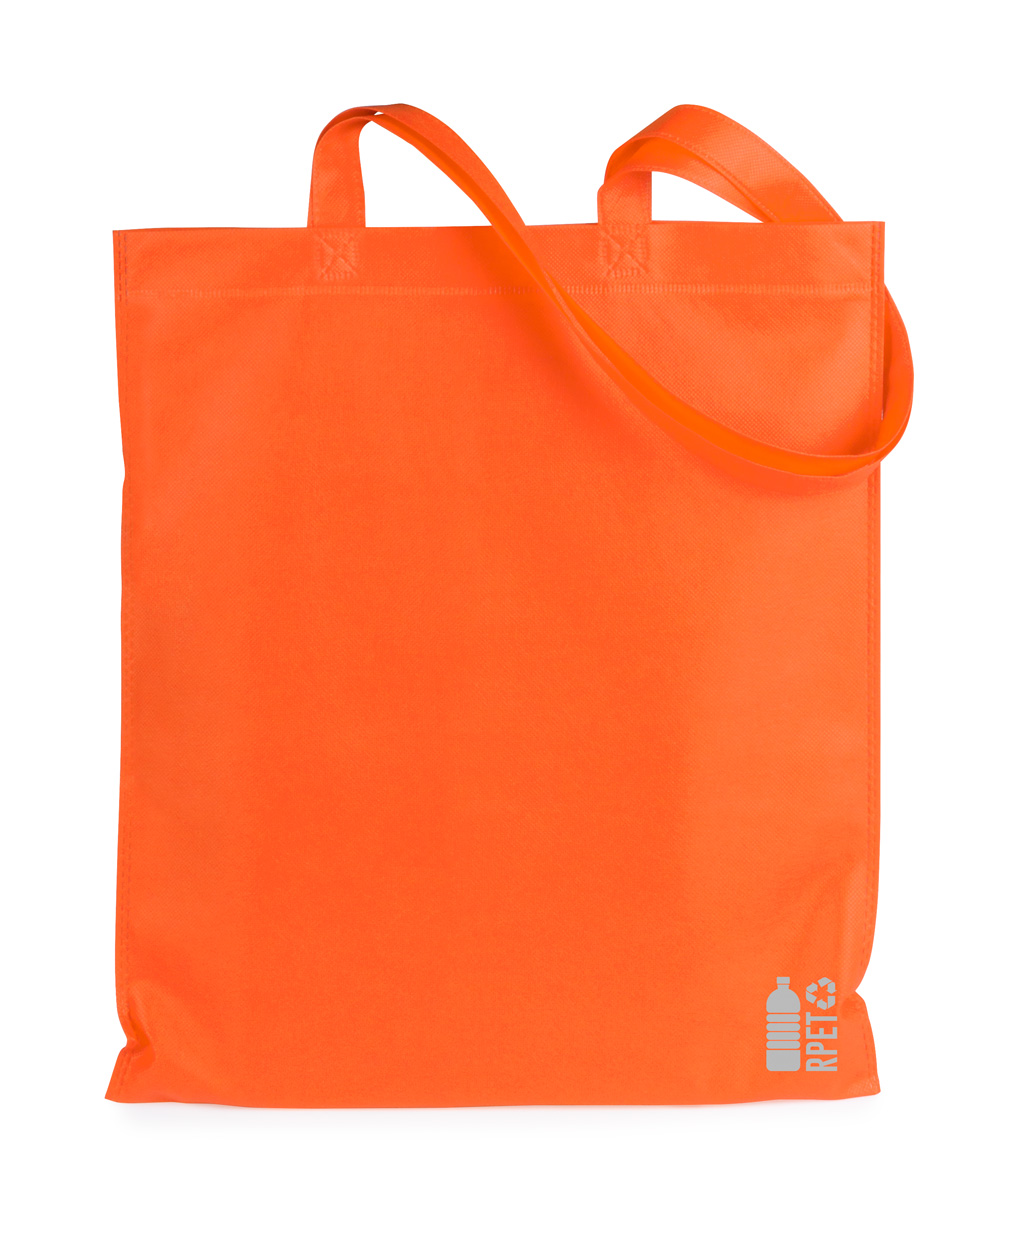 Rezzin RPET shopping bag - orange